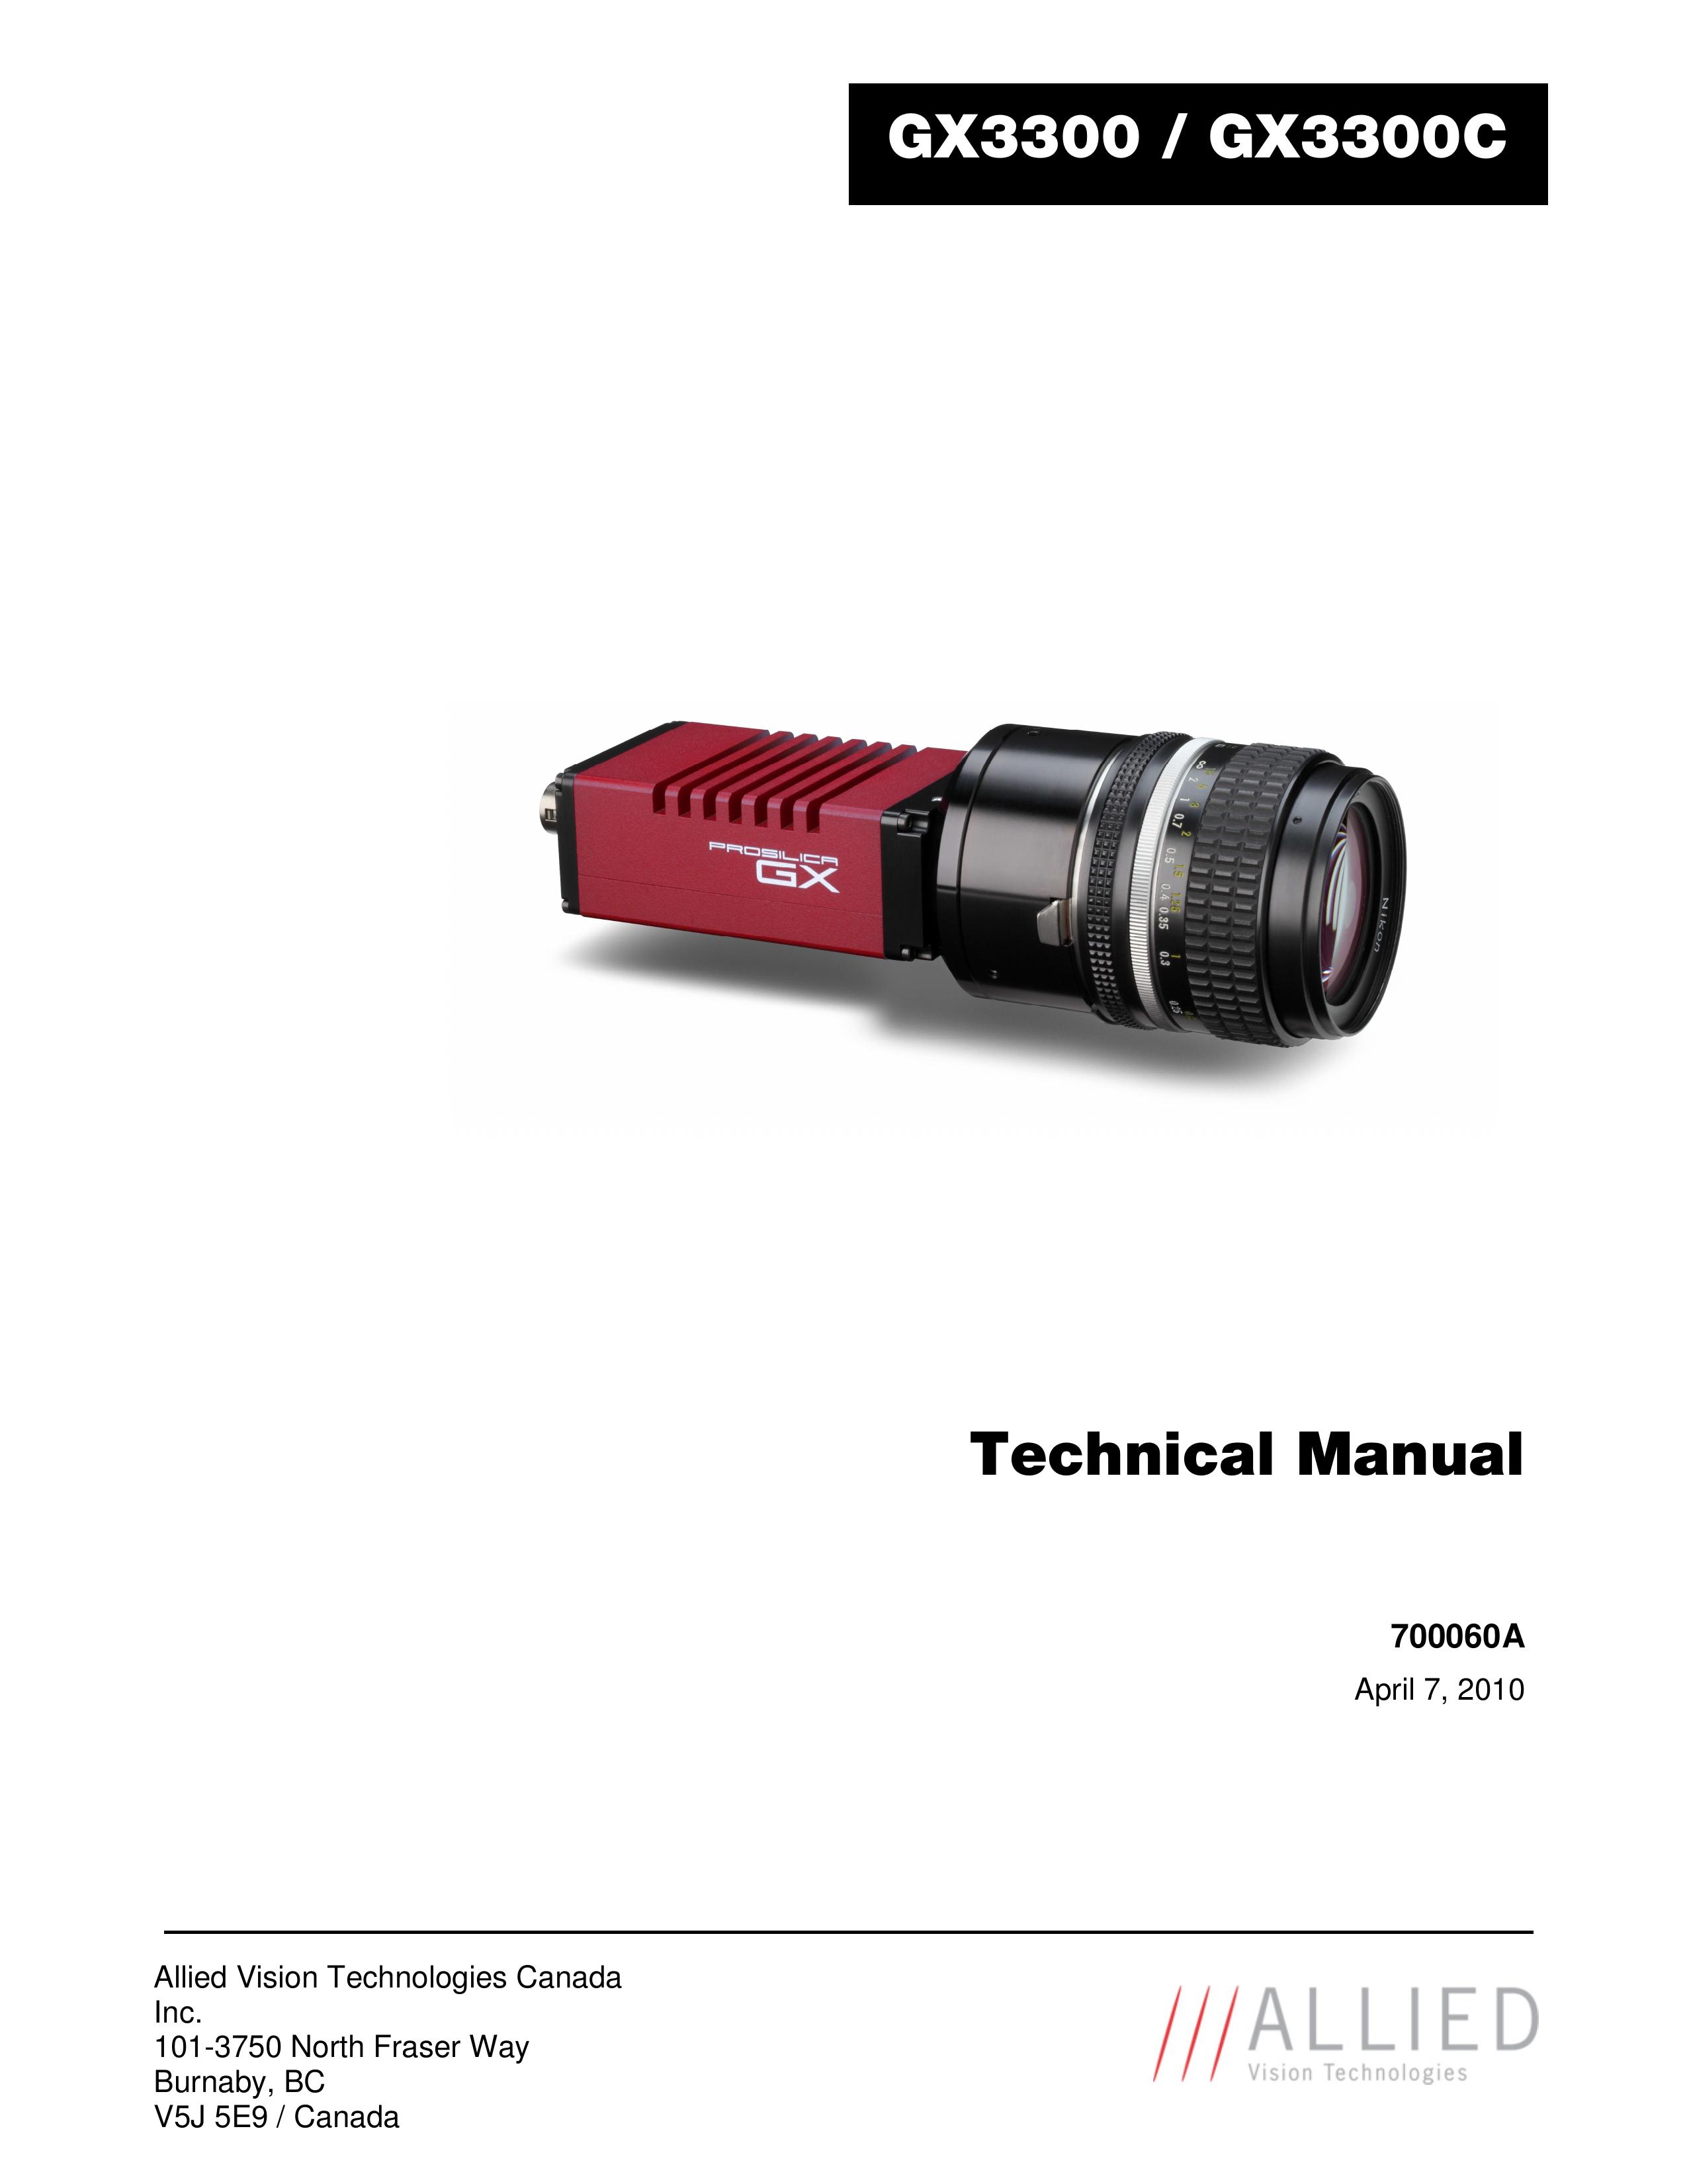 Allied International GX3300C Digital Camera User Manual (Page 1)